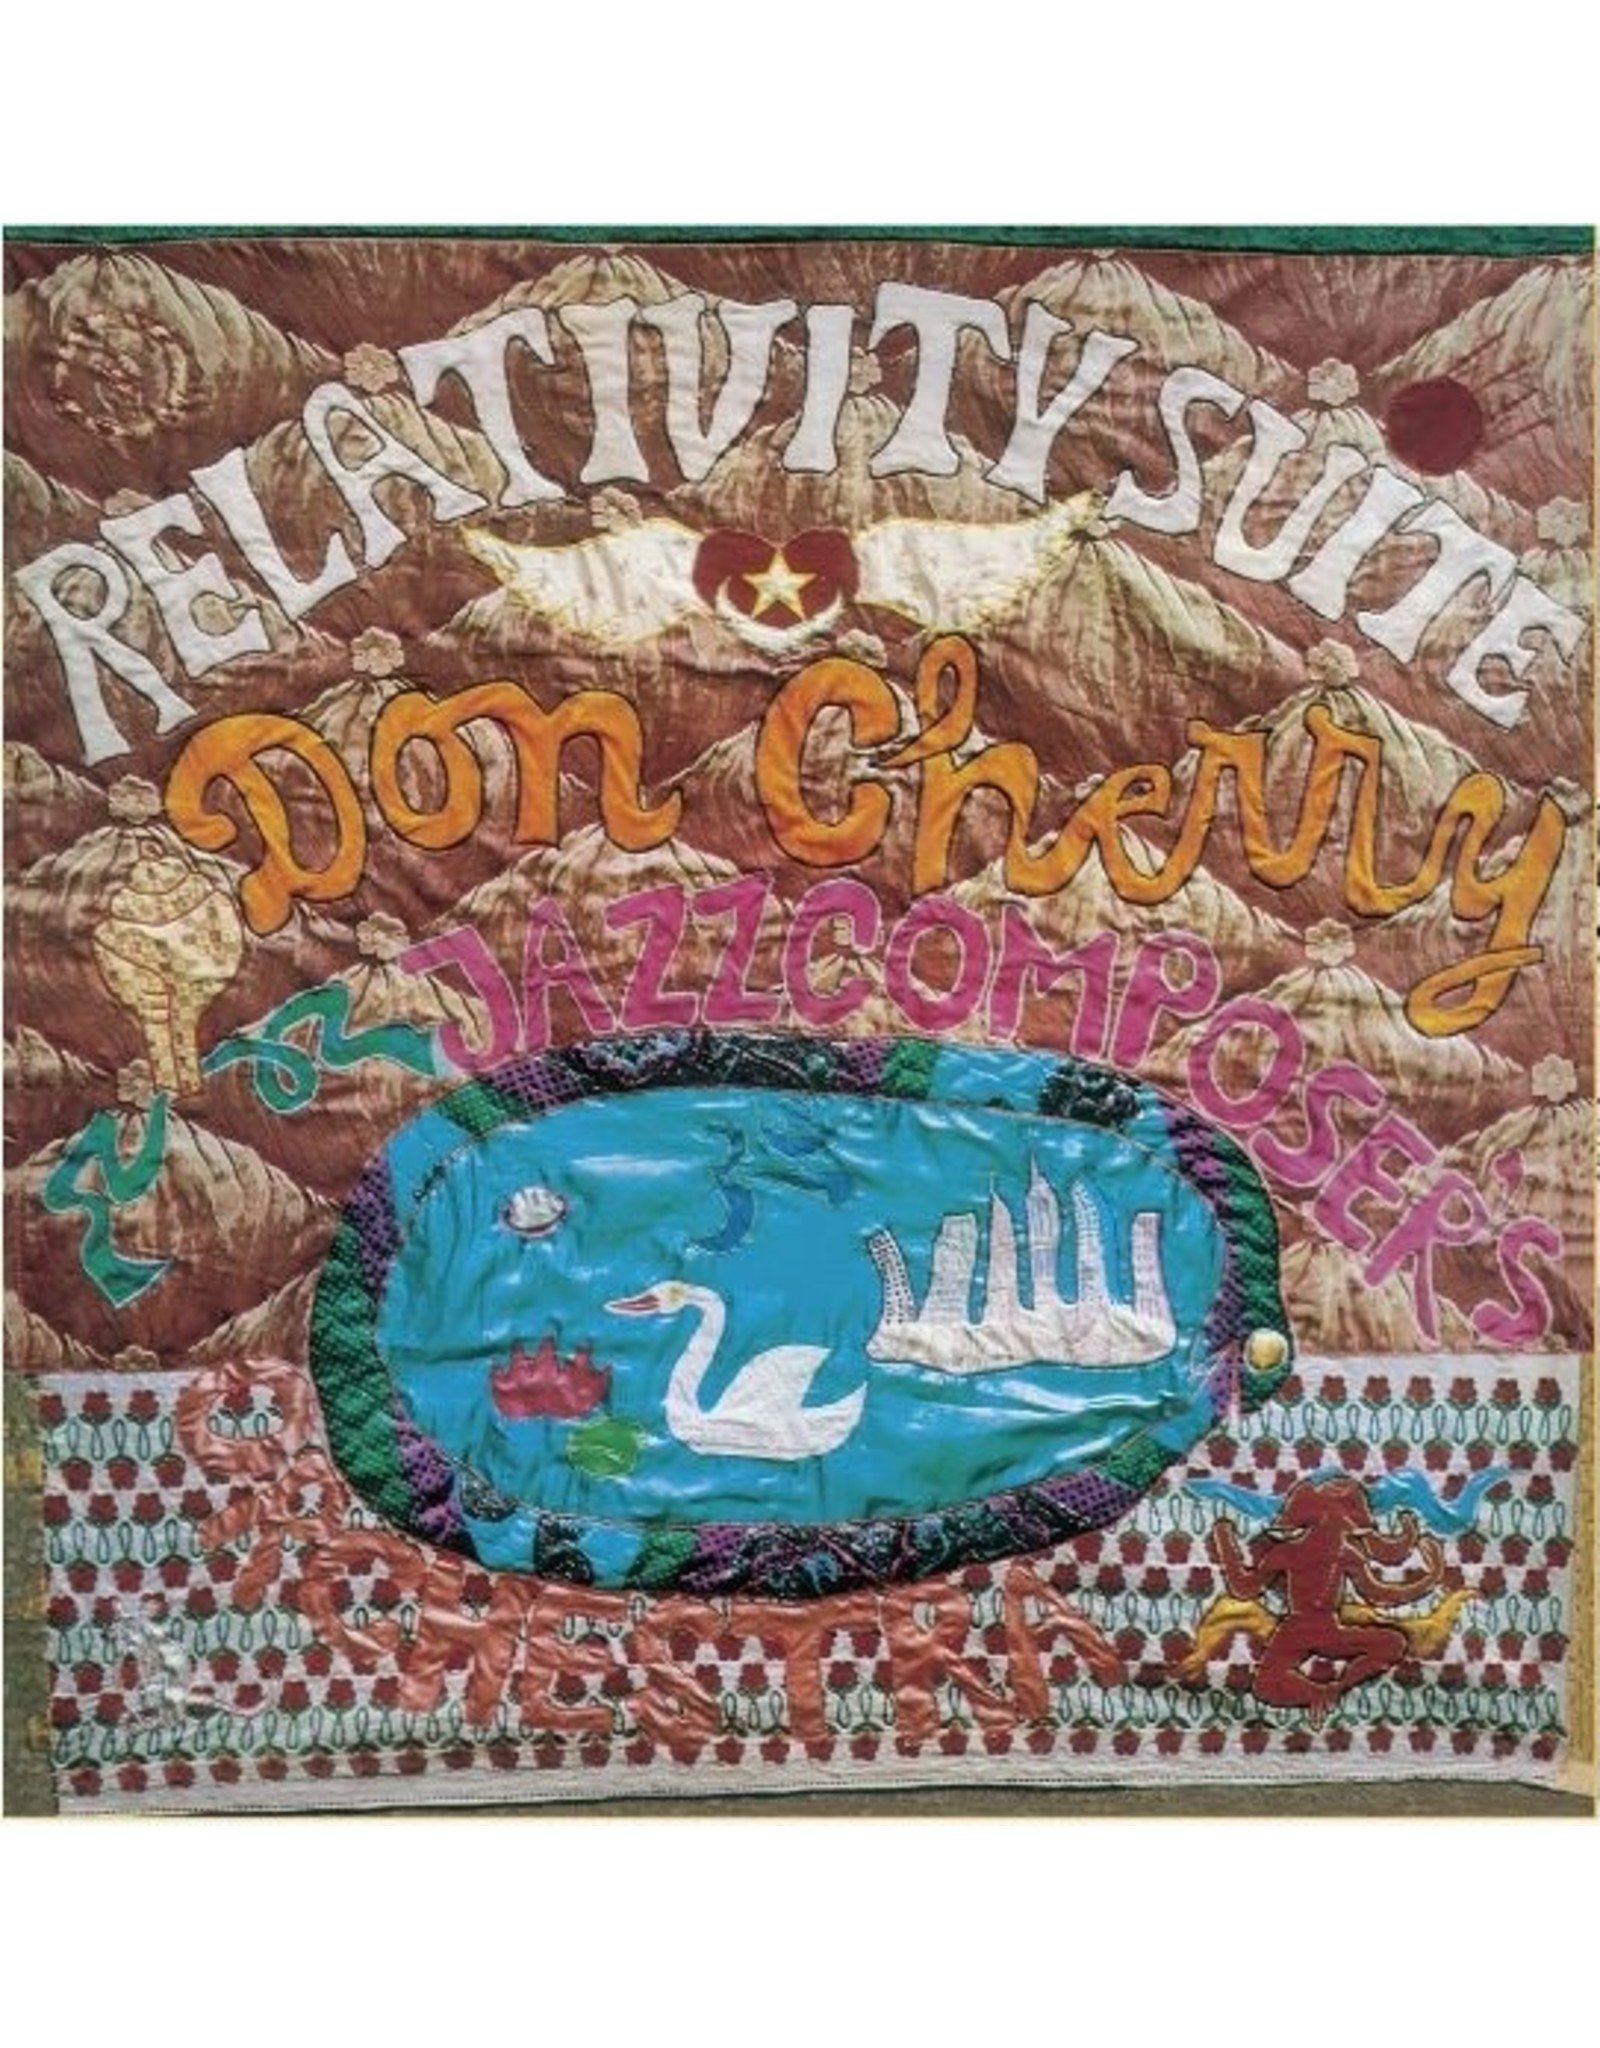 New Vinyl Don Cherry - Relativity Suite (Clear) LP